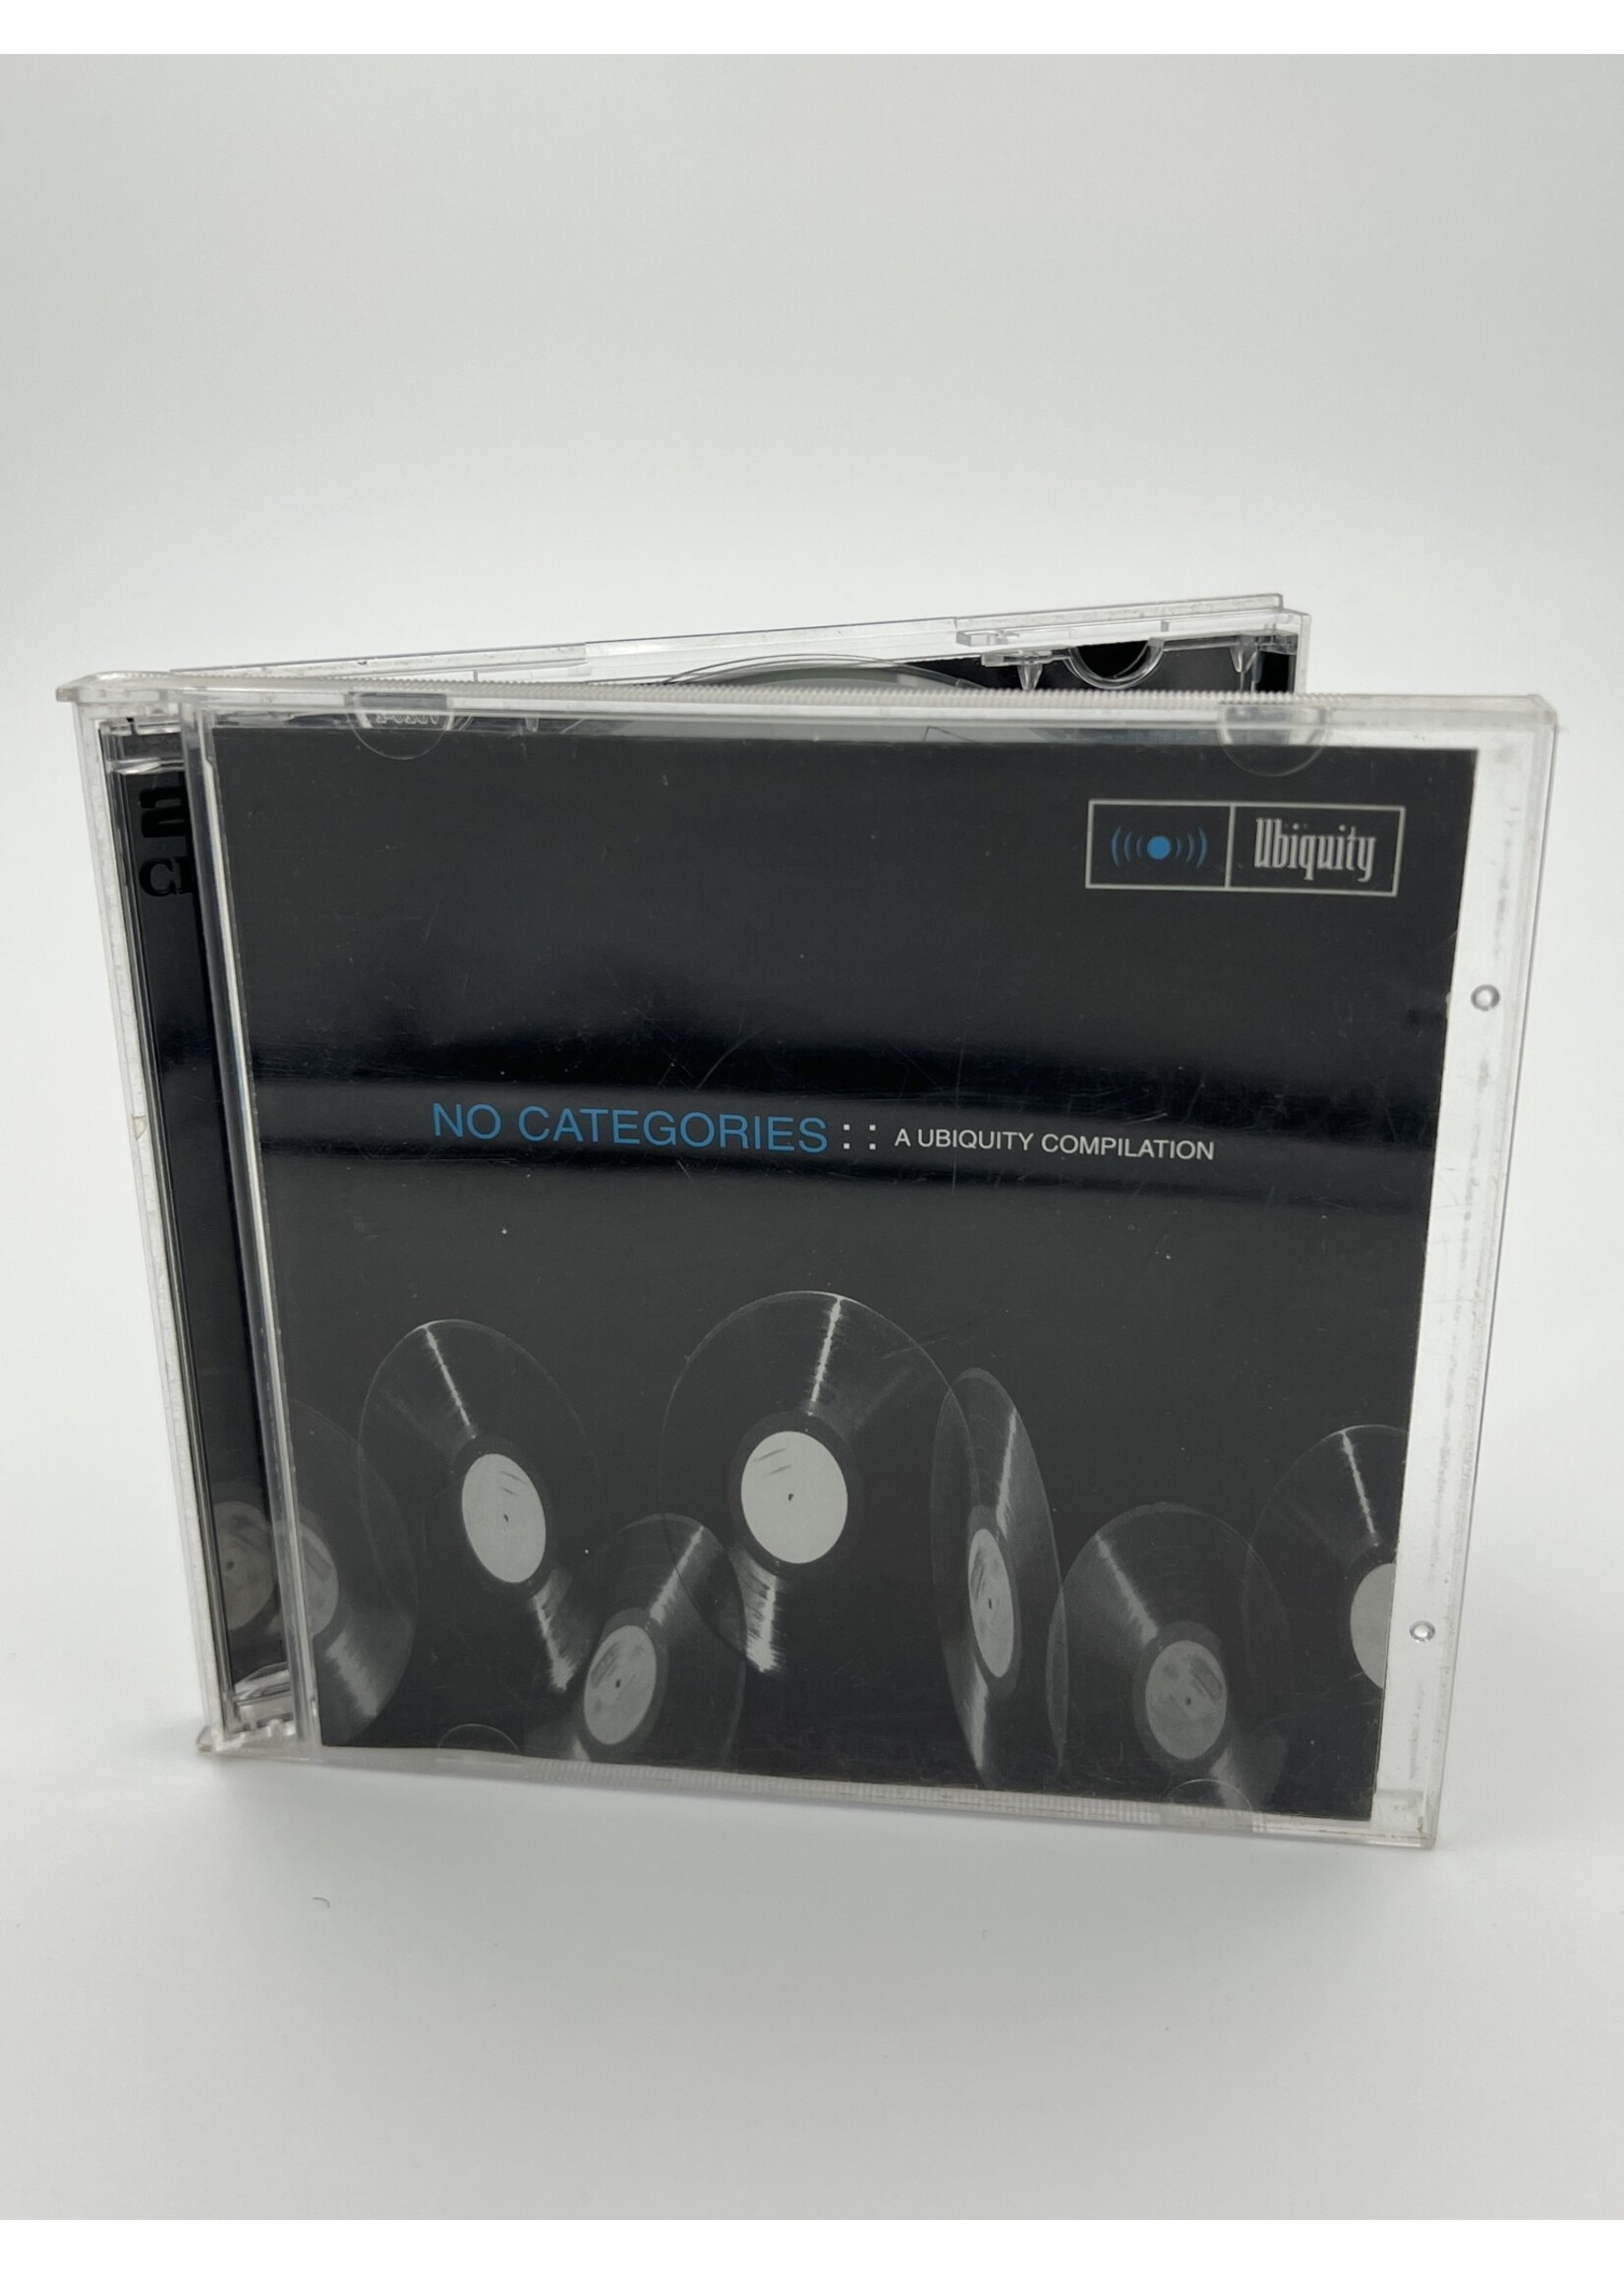 CD   No Categories A Ubiquity Compilation Various Artist CD